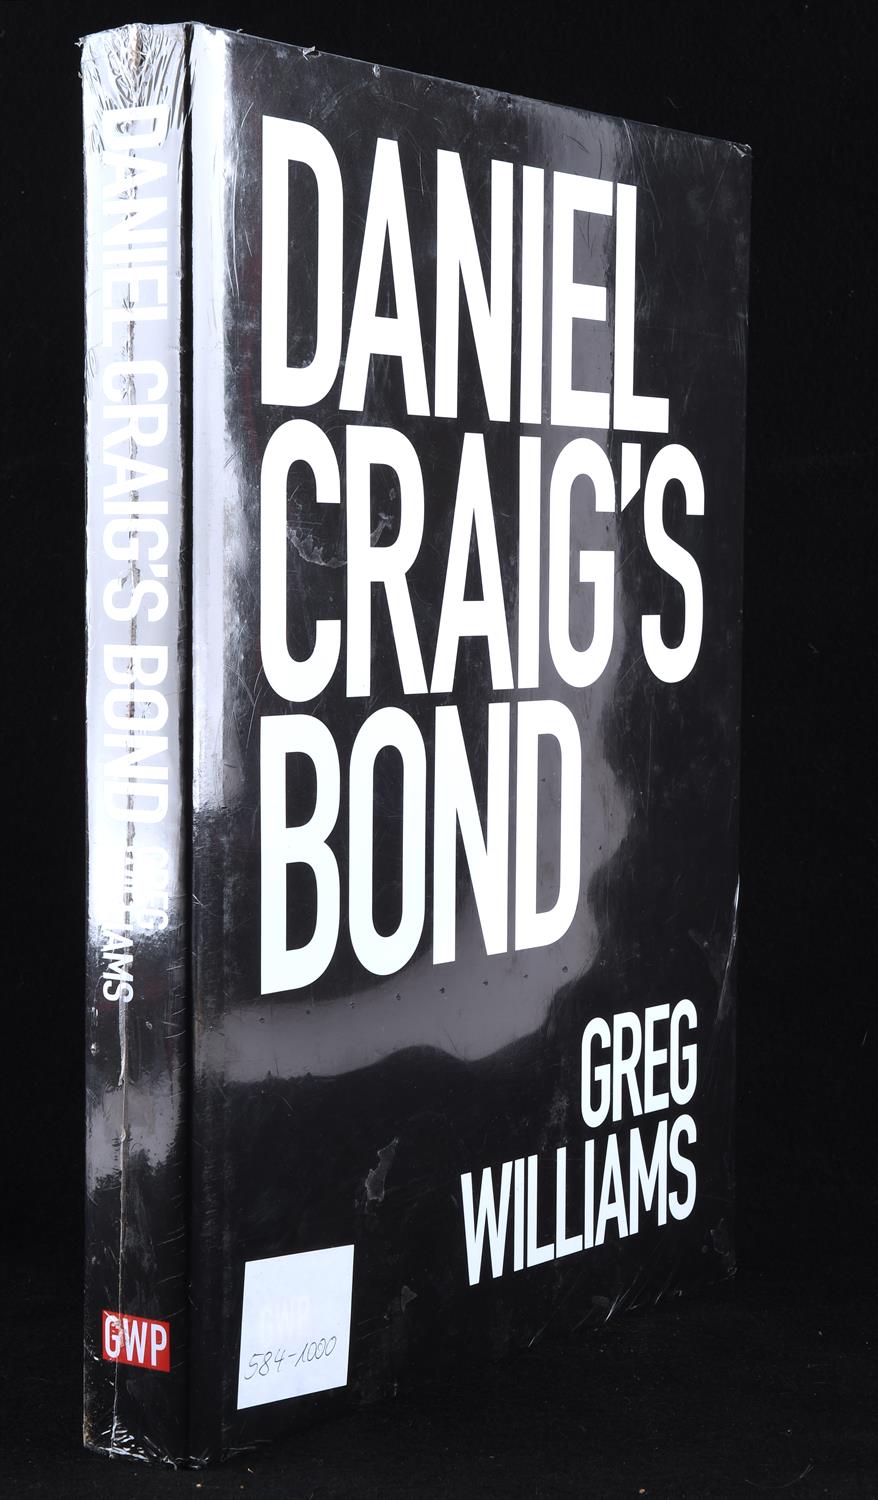 AMENDED DESCRIPTION James Bond No Time To Die (2021) Daniel Craig's Bond hardback book by Greg - Image 2 of 2